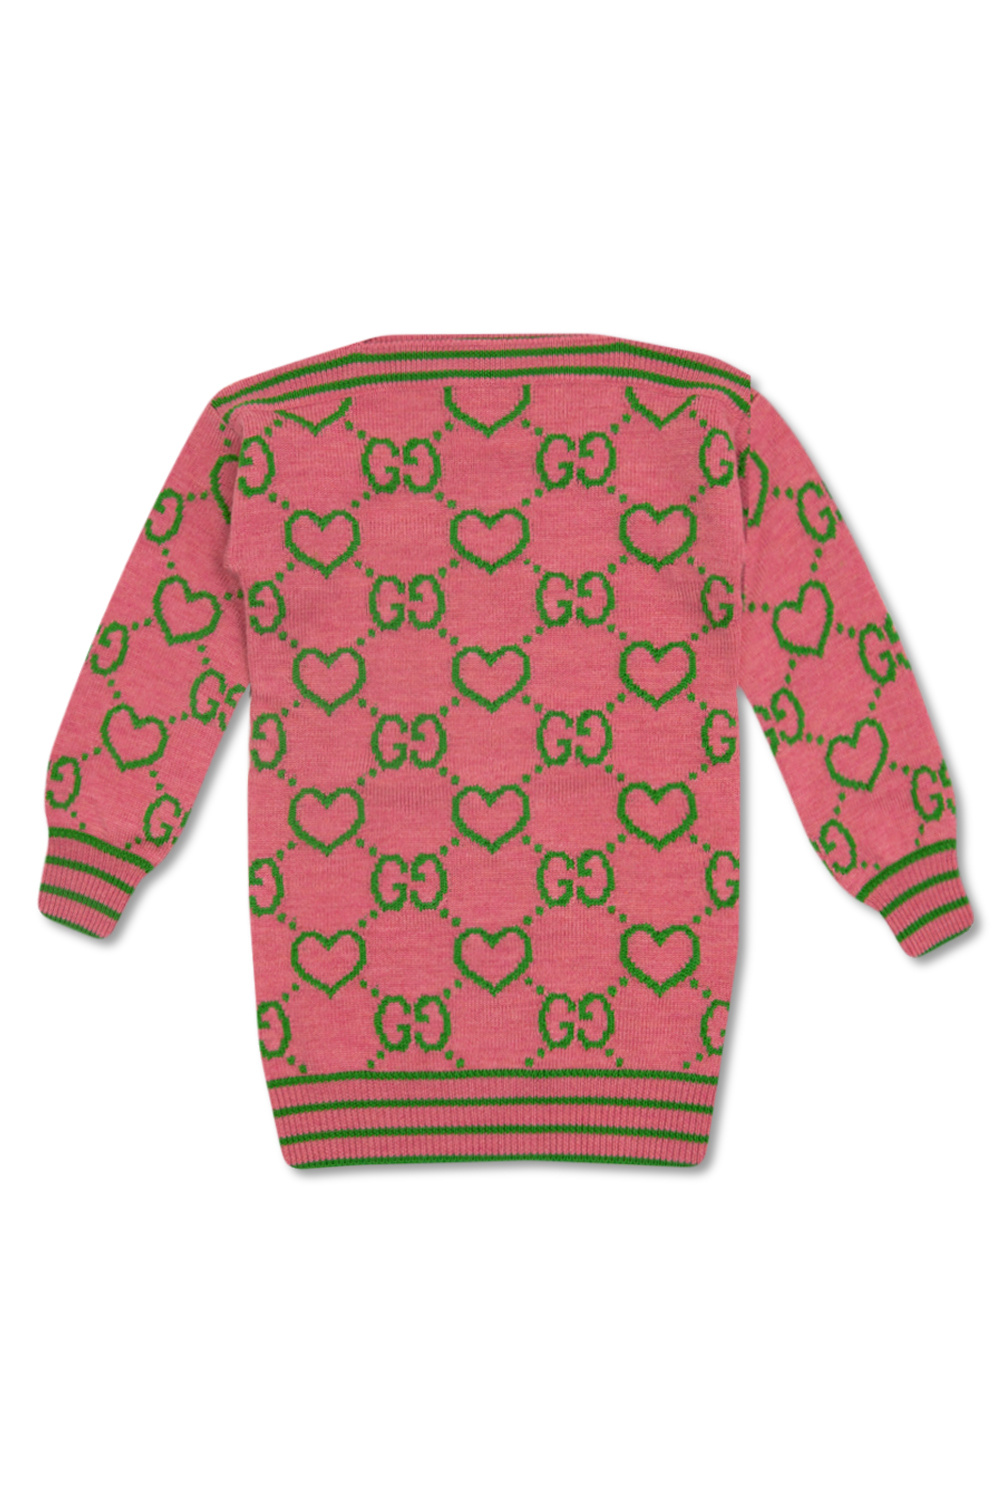 Gucci Kids Sweater with GG pattern